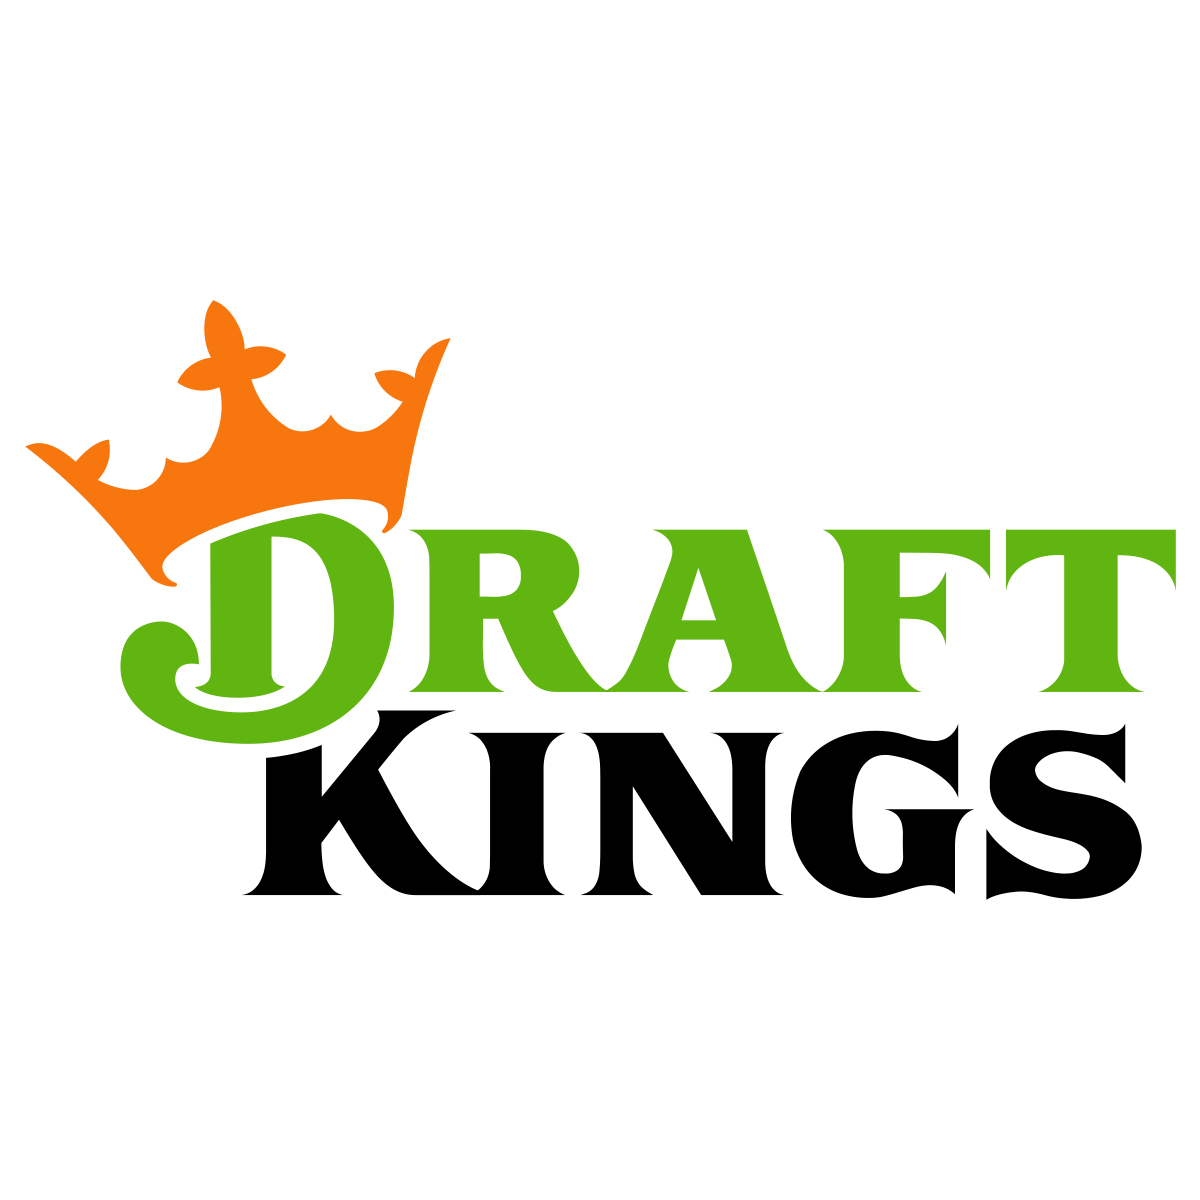 www.draftkings.com